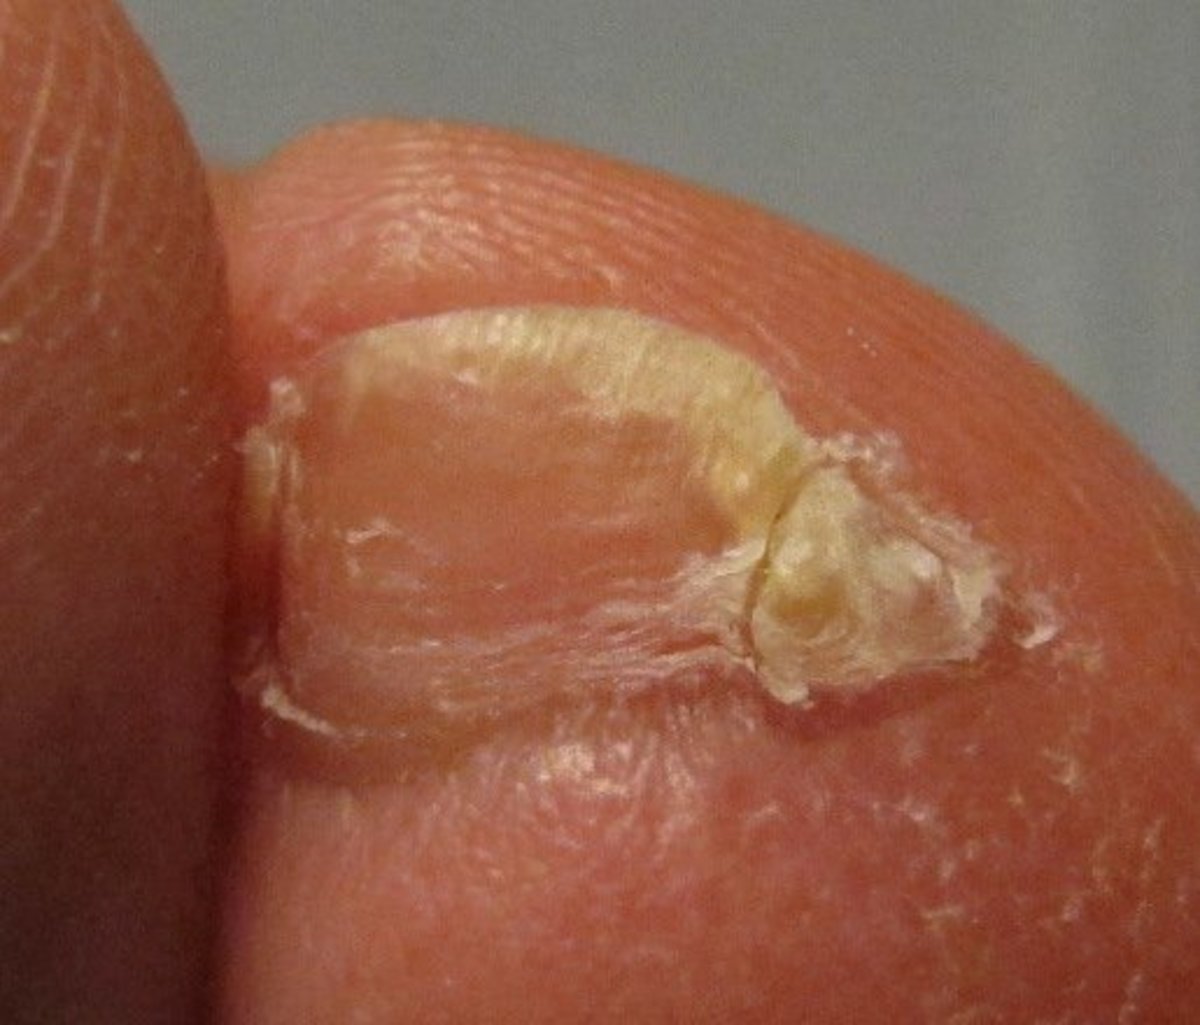 Accessory Nail on the Pinky Toe